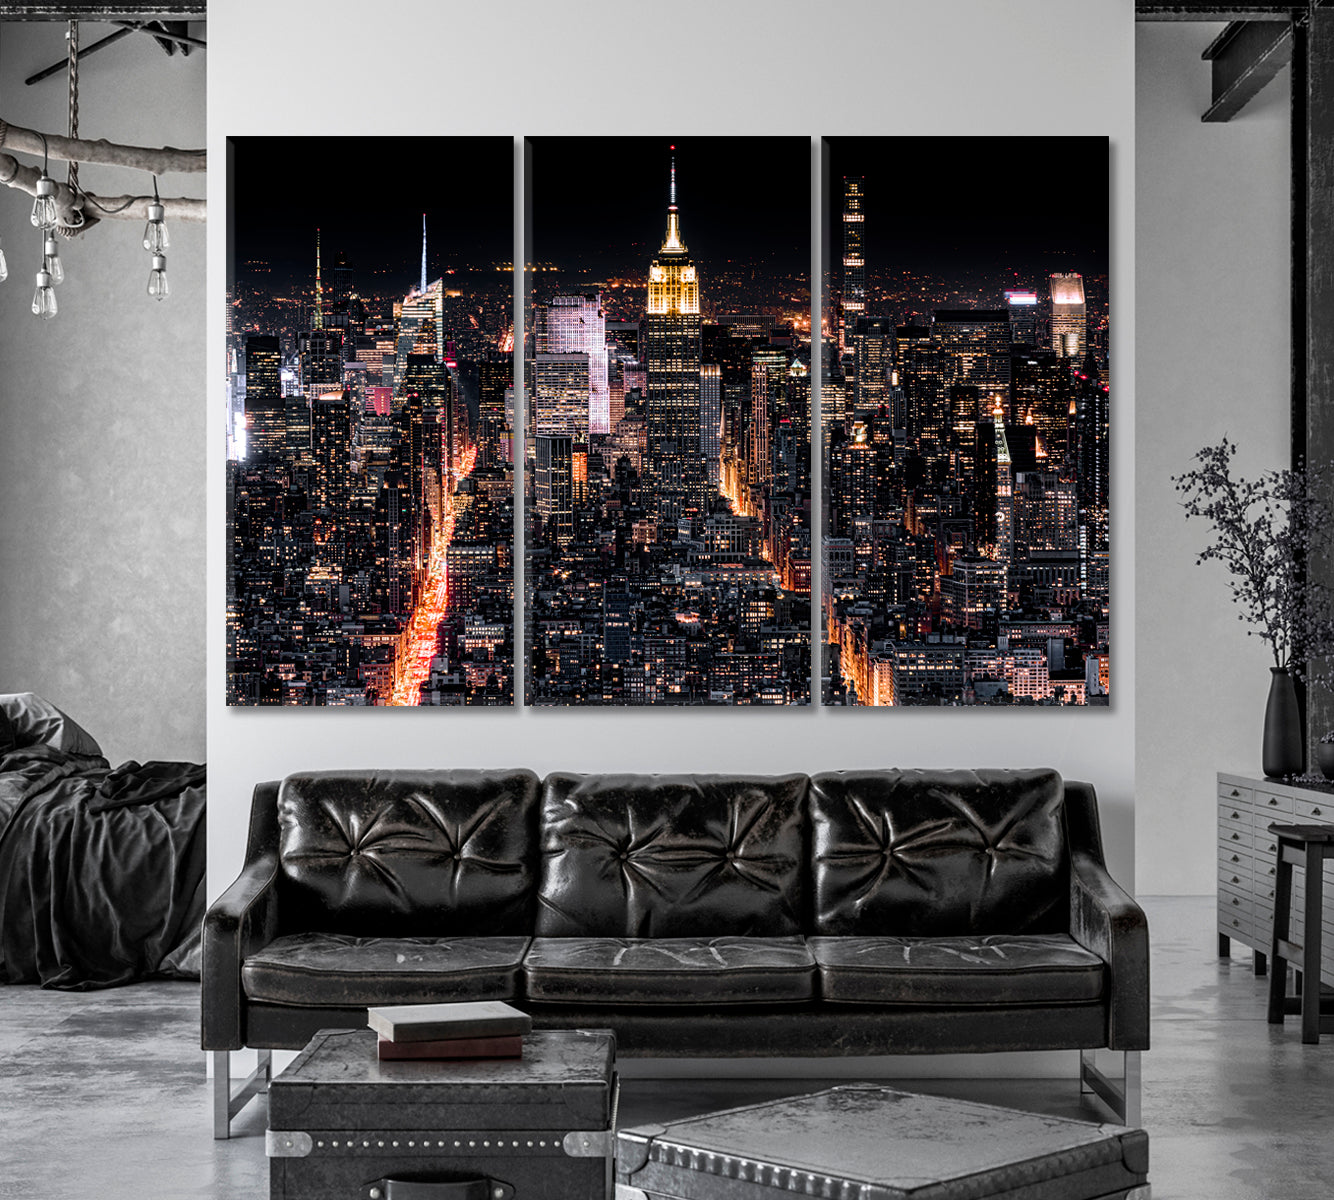 Night New York with Illuminated Avenues Canvas Print-Canvas Print-CetArt-1 Panel-24x16 inches-CetArt